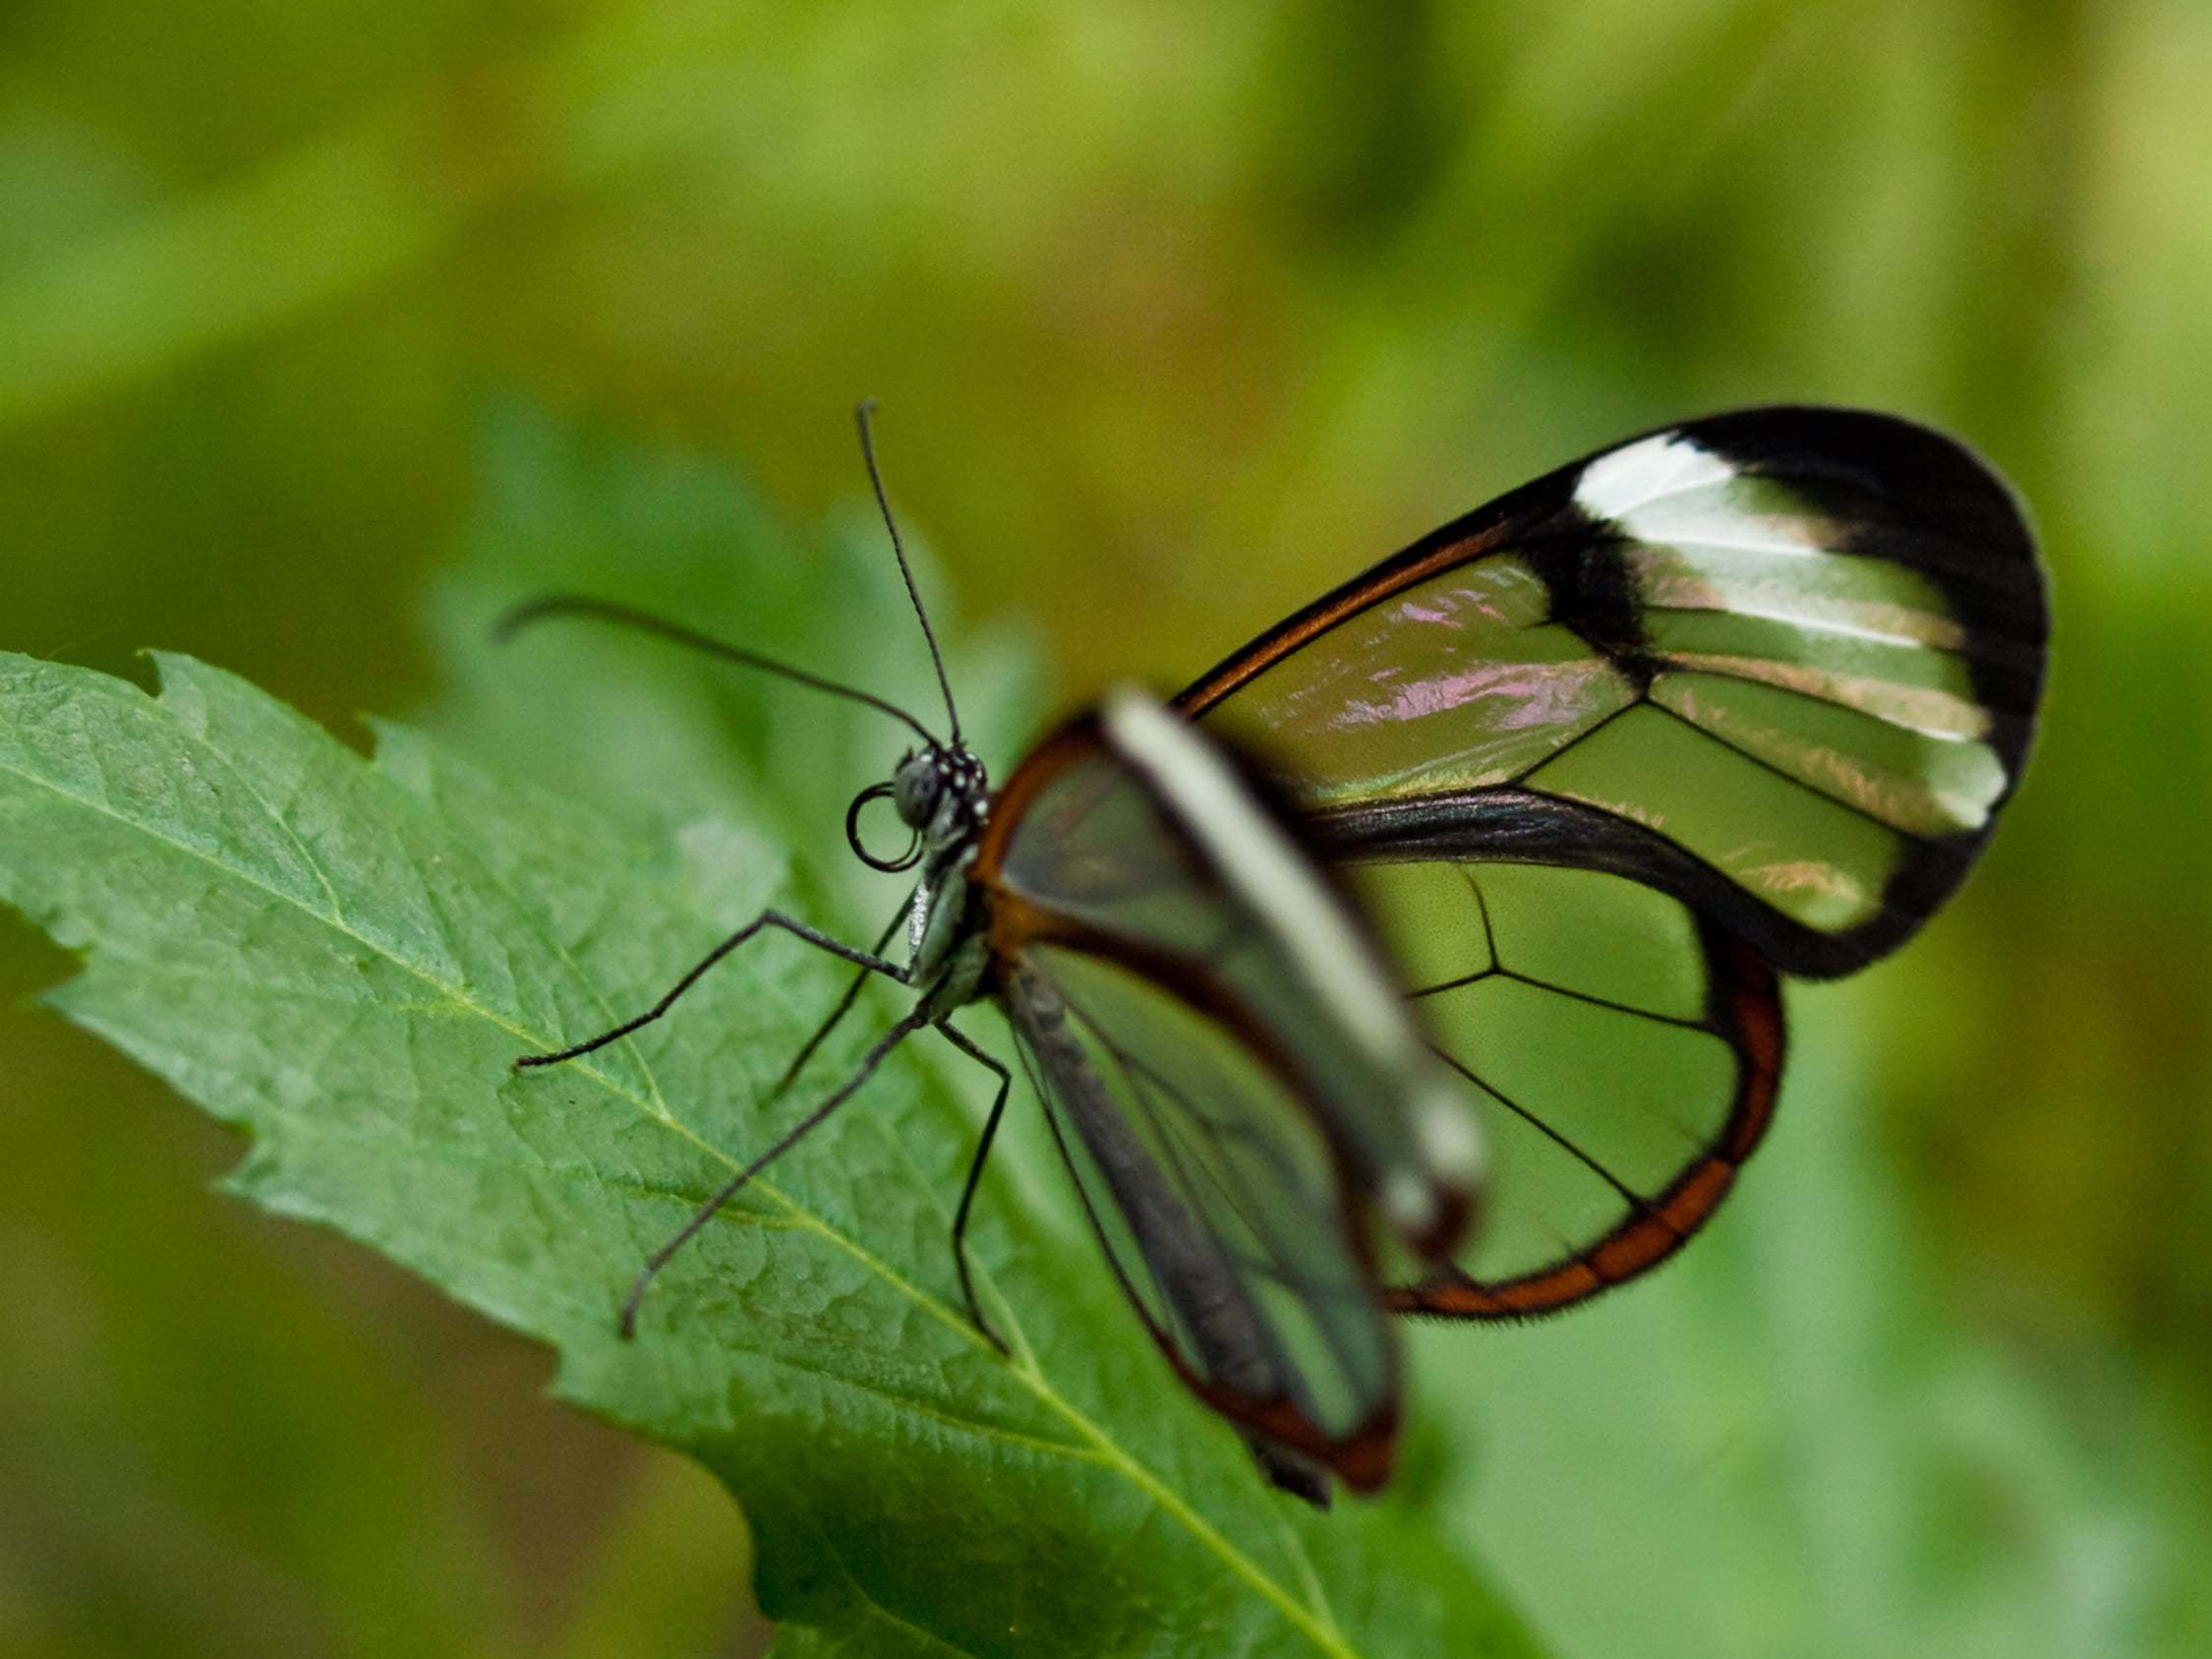 glasswing-butterfly-closeup-photo-35mm-wallpaper.jpg